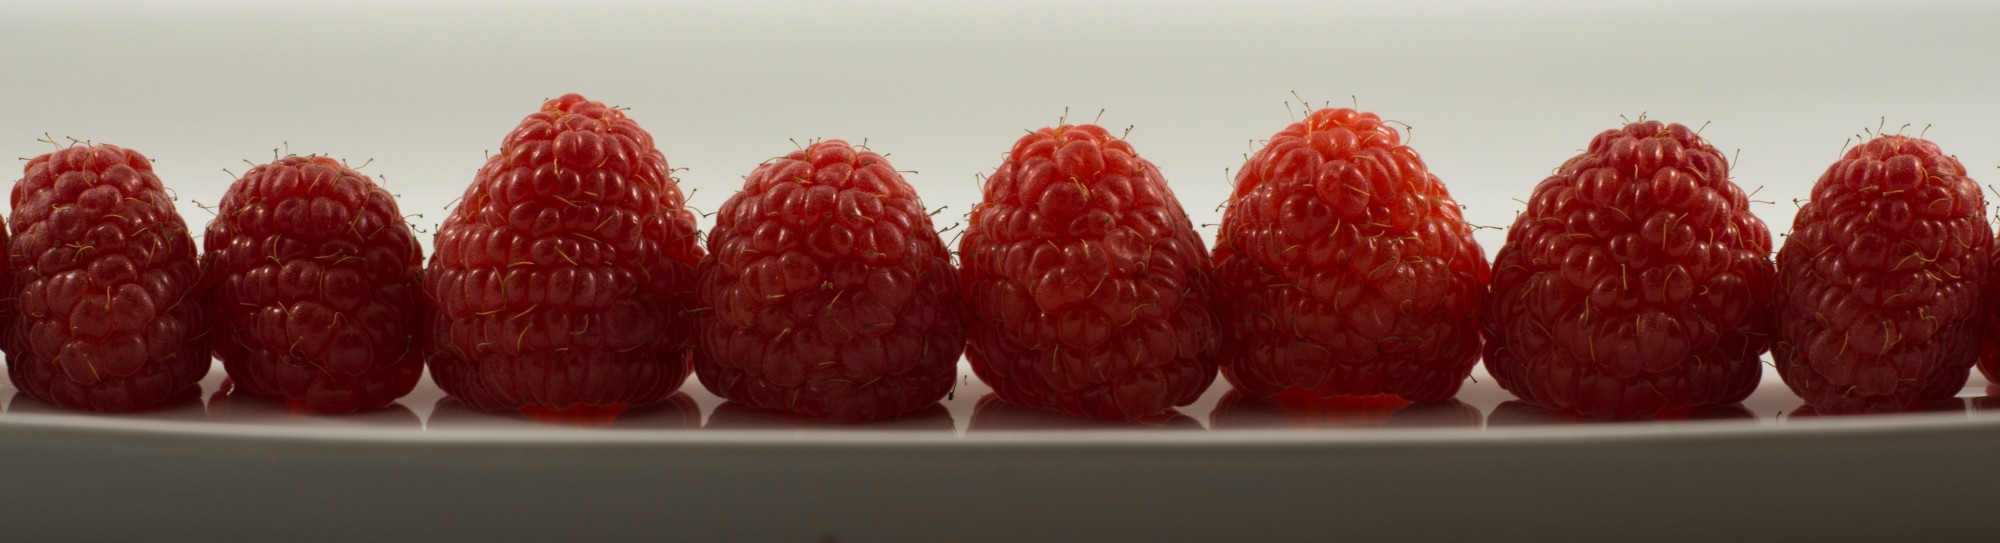 Eight raspberries